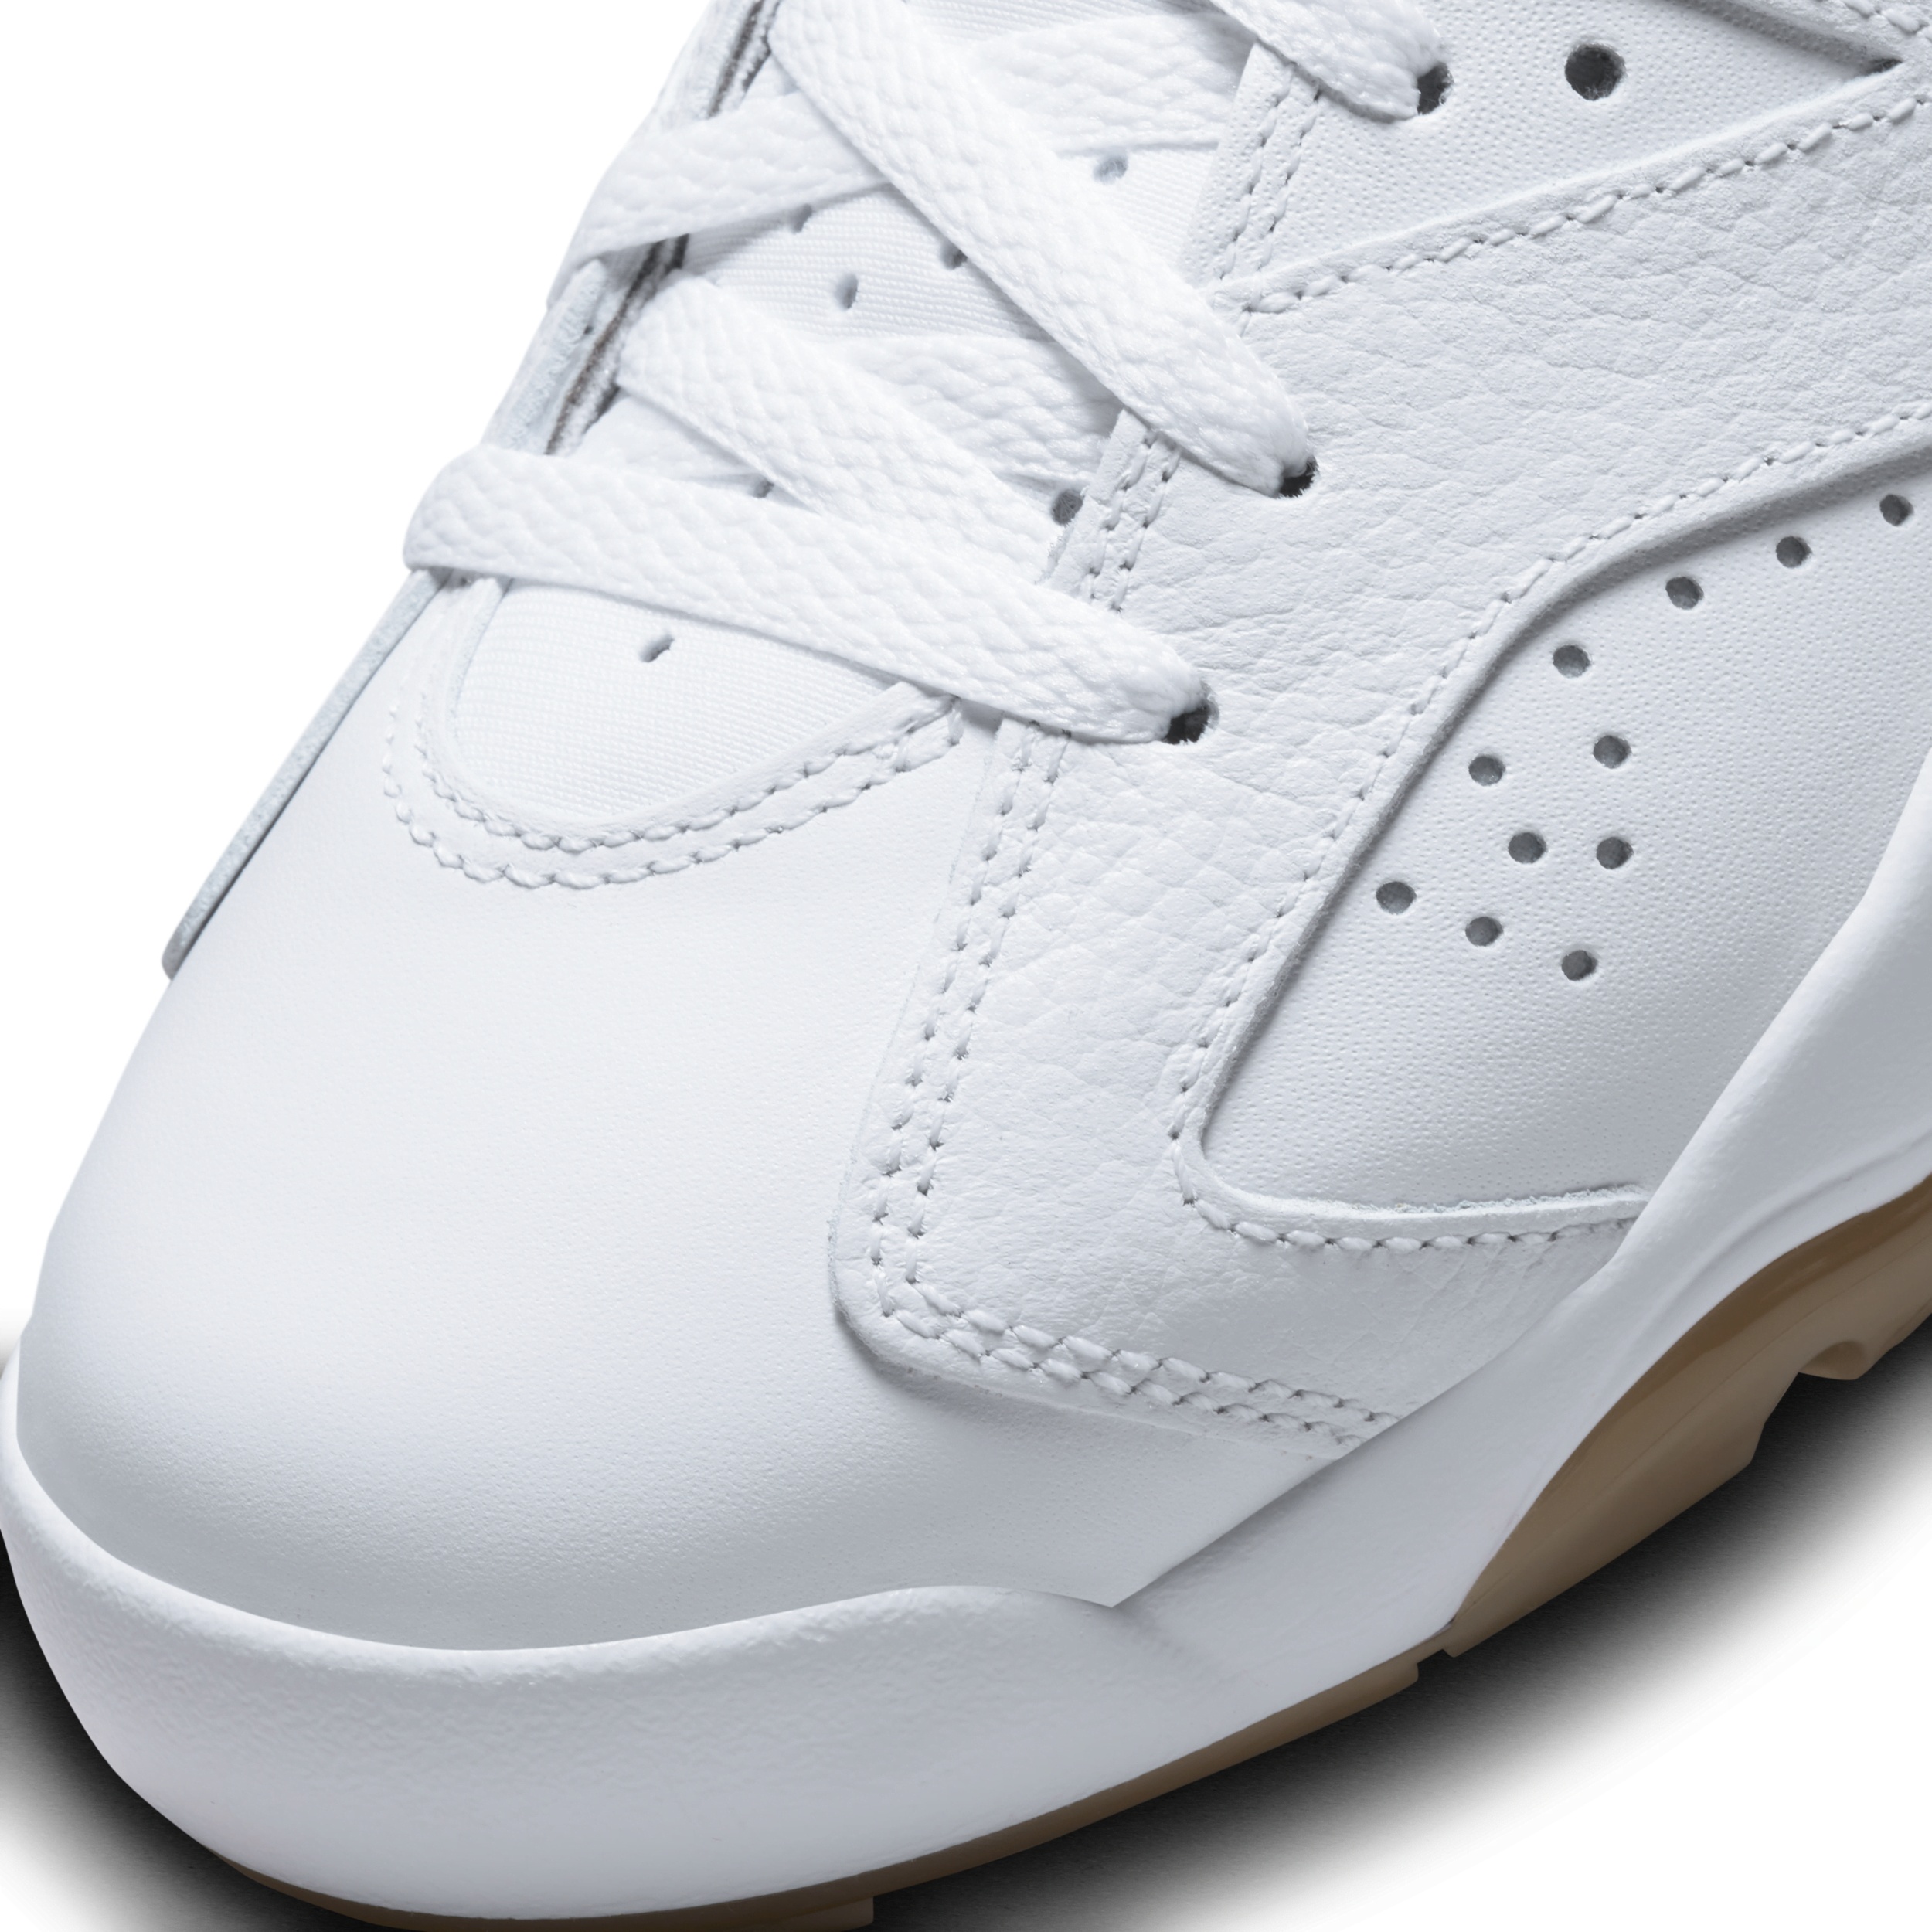 Men's Jordan Retro 6 G Golf Shoes - 8